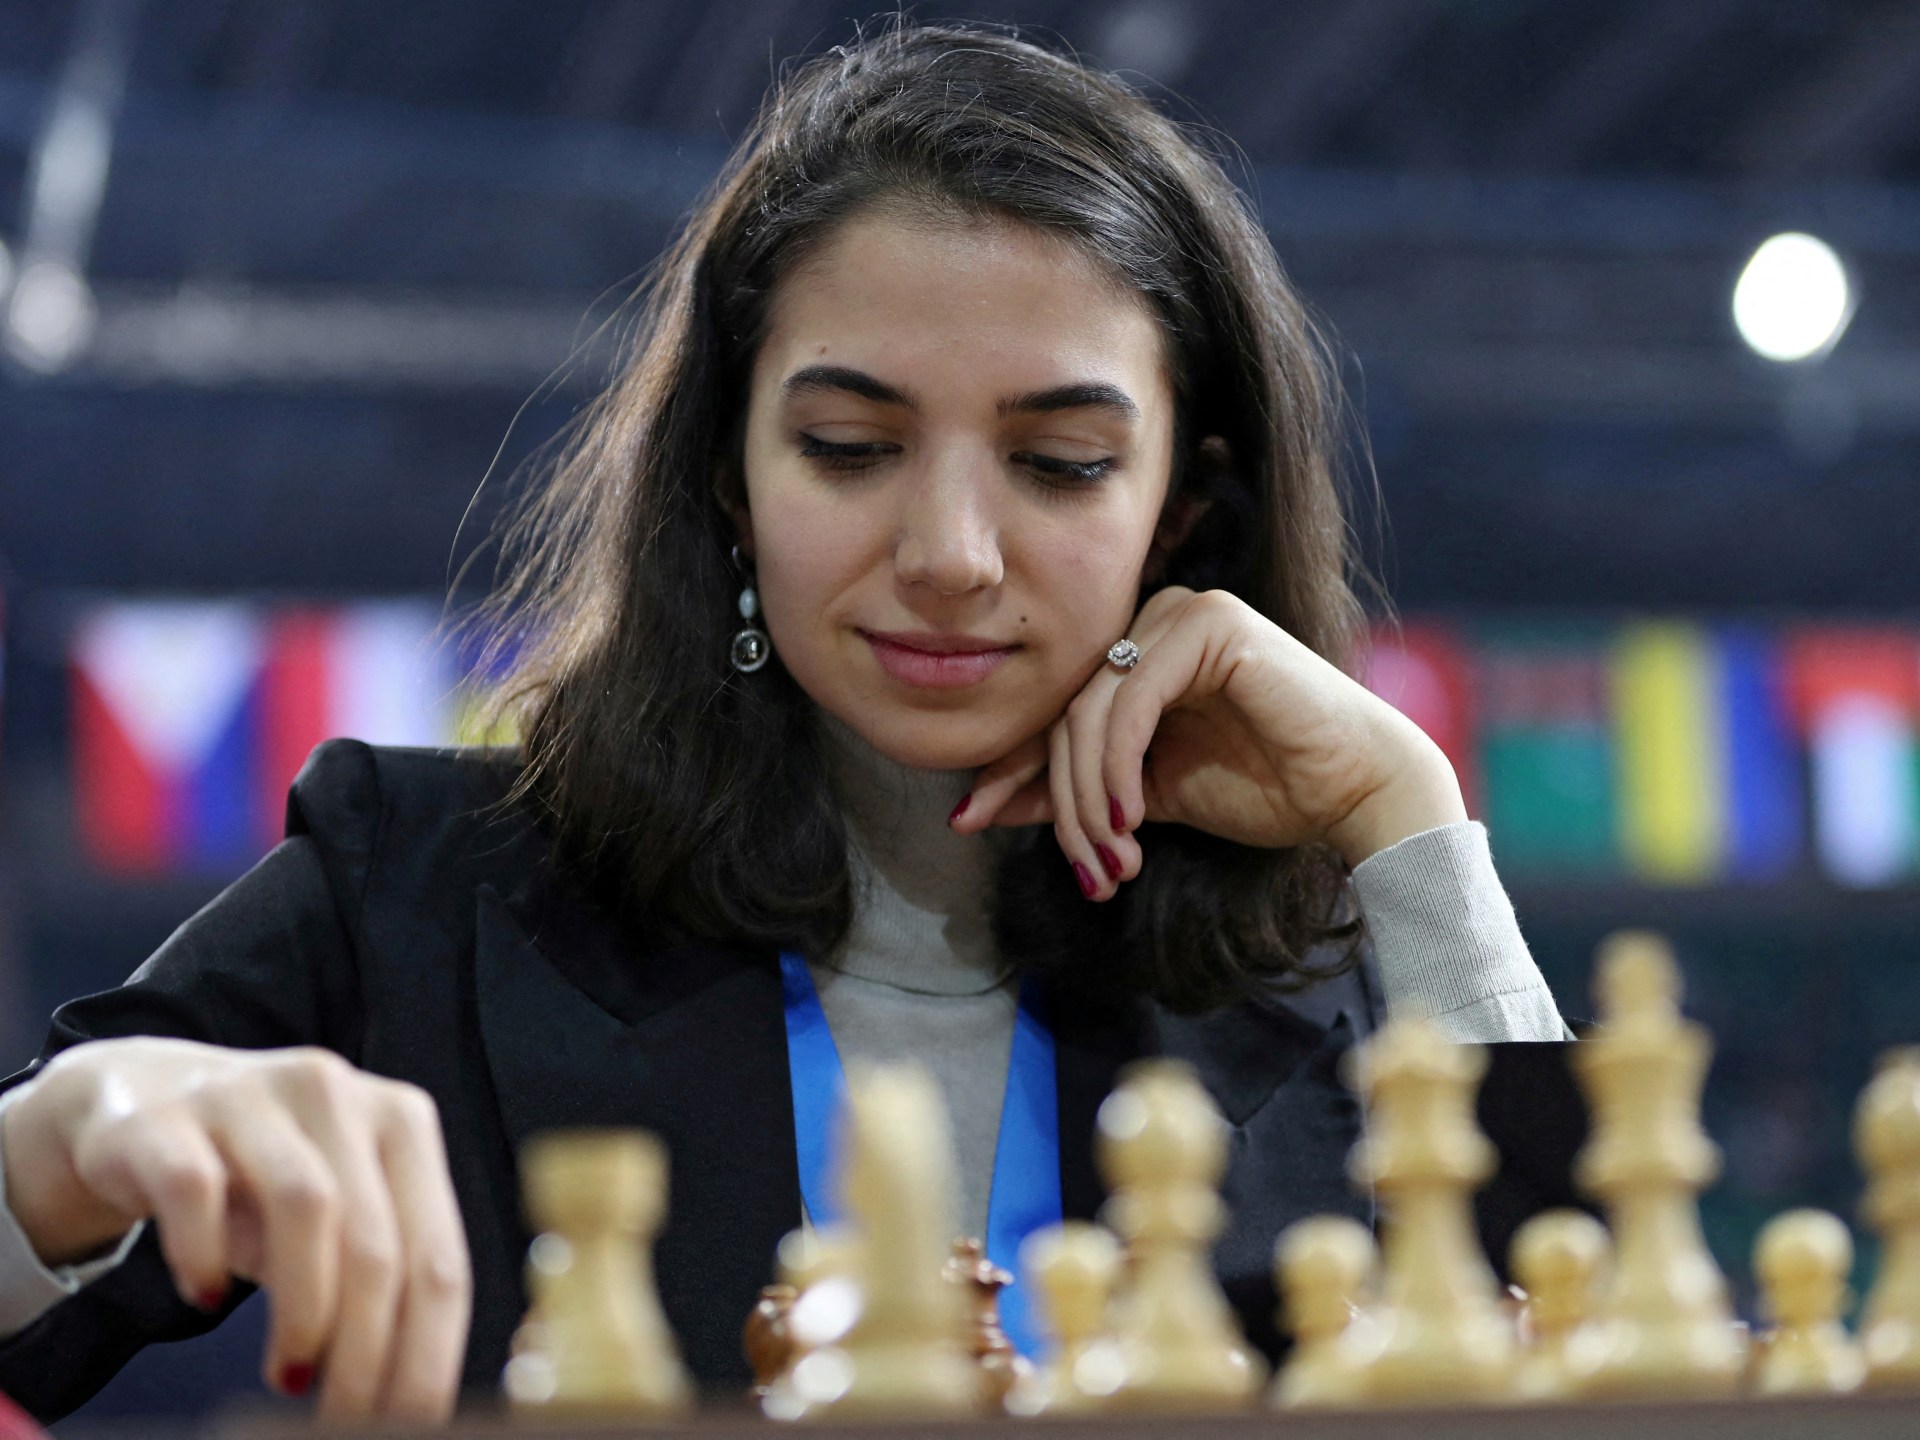 Spain grants nationality to self-exiled Iran chess player Sara Khadem